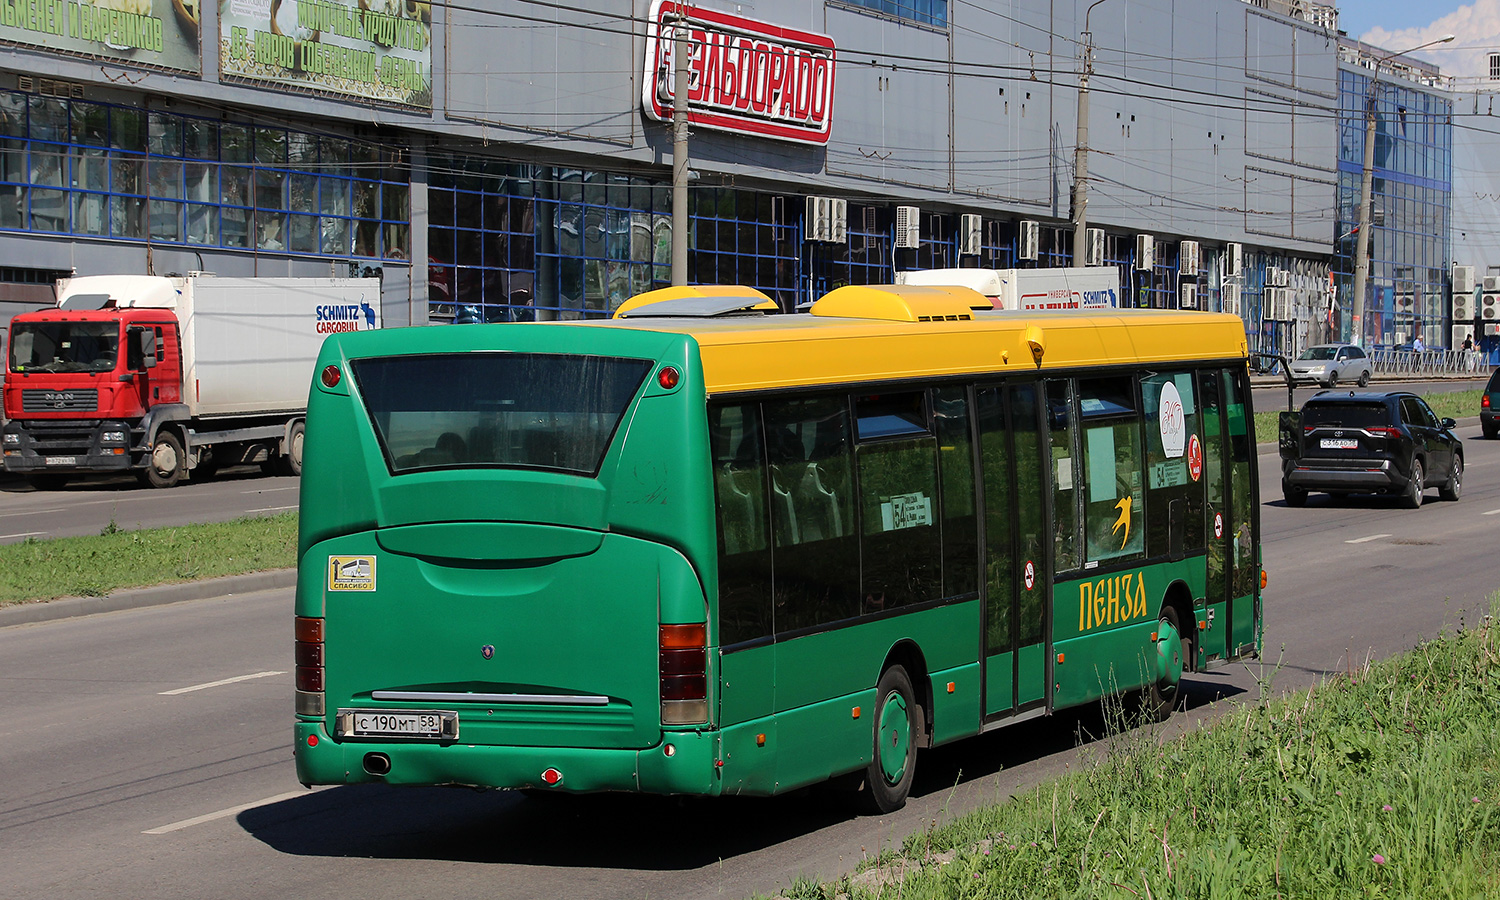 Penza region, Scania OmniLink I (Scania-St.Petersburg) № С 190 МТ 58